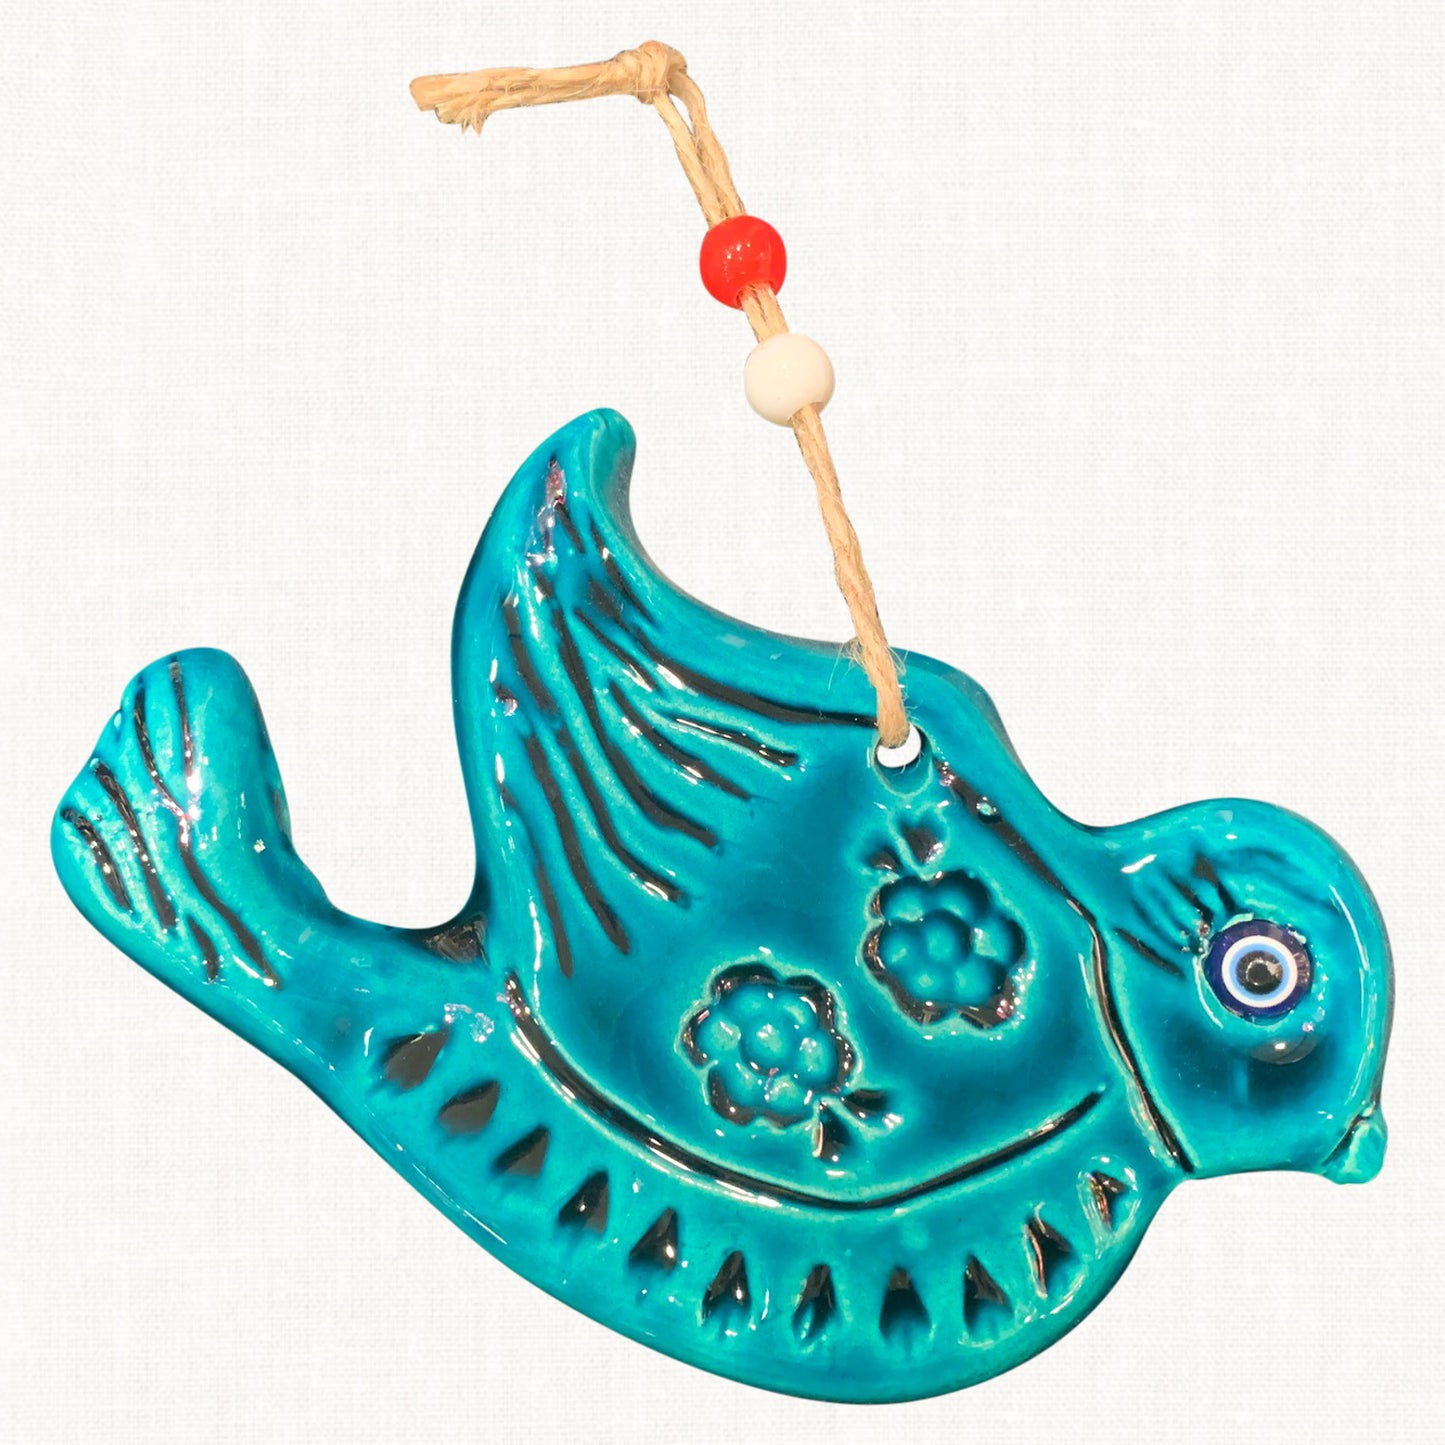 Turquoise Bird Ceramic For Home Decoration